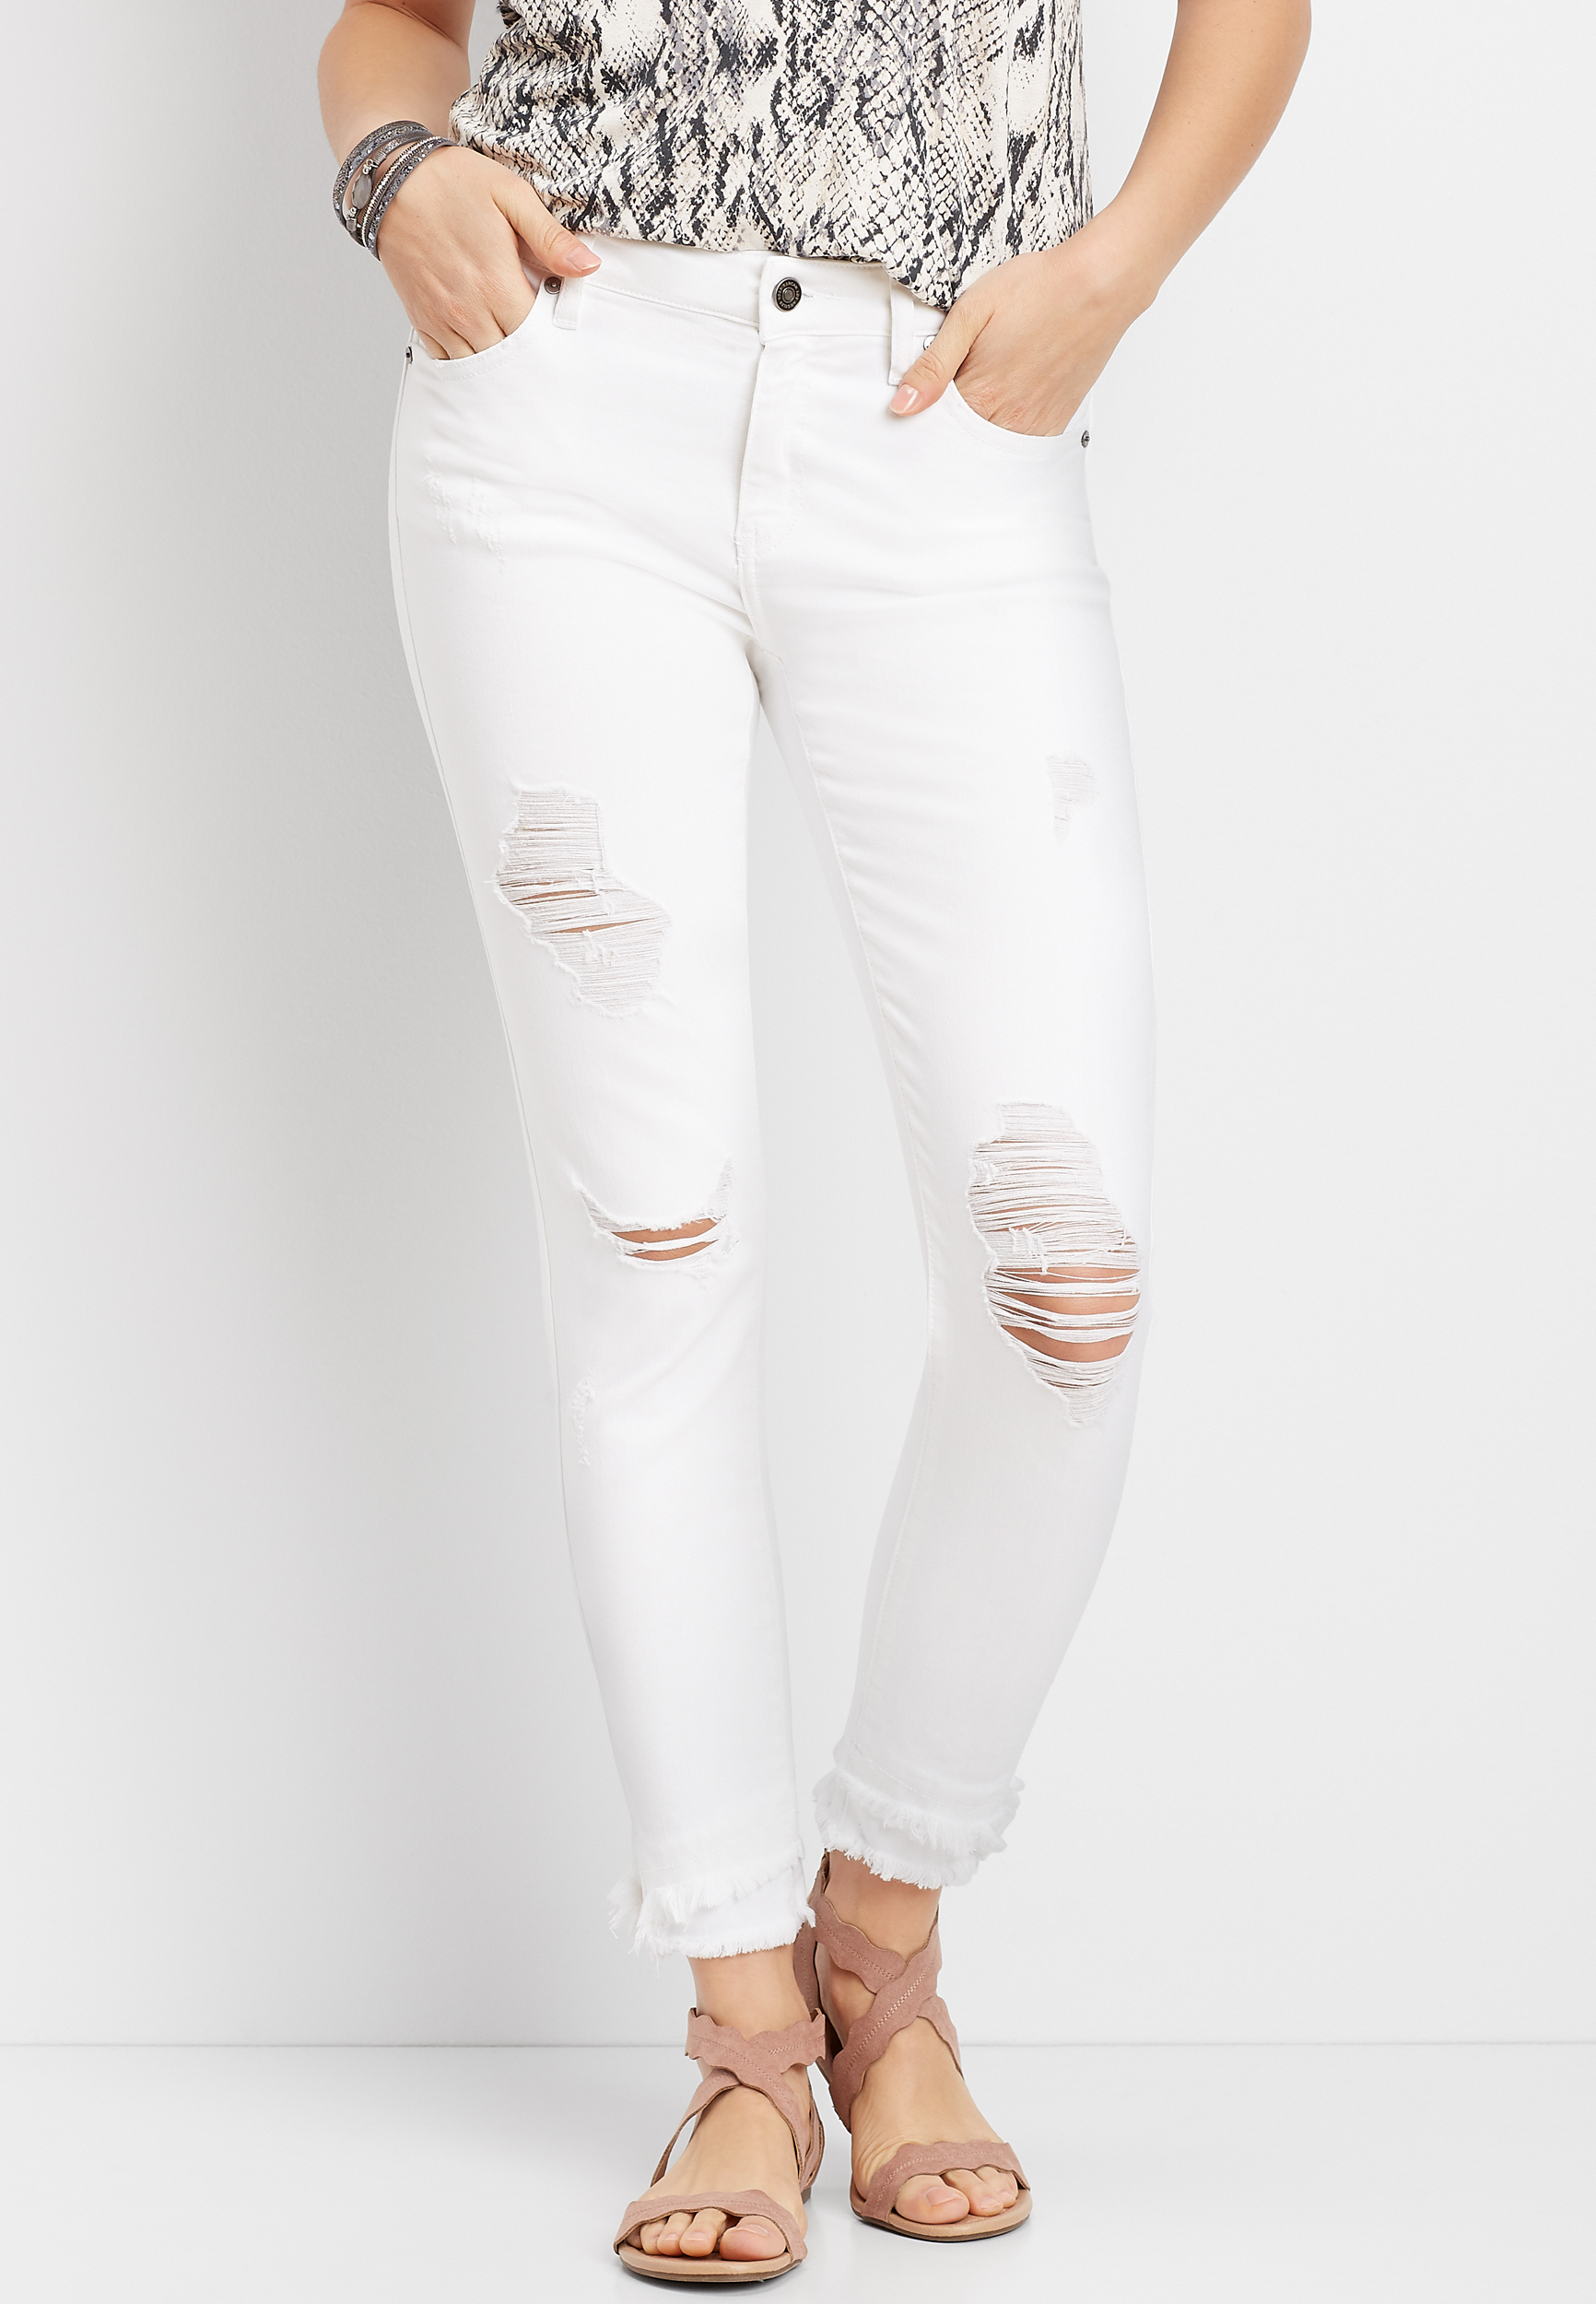 white frayed skinny jeans